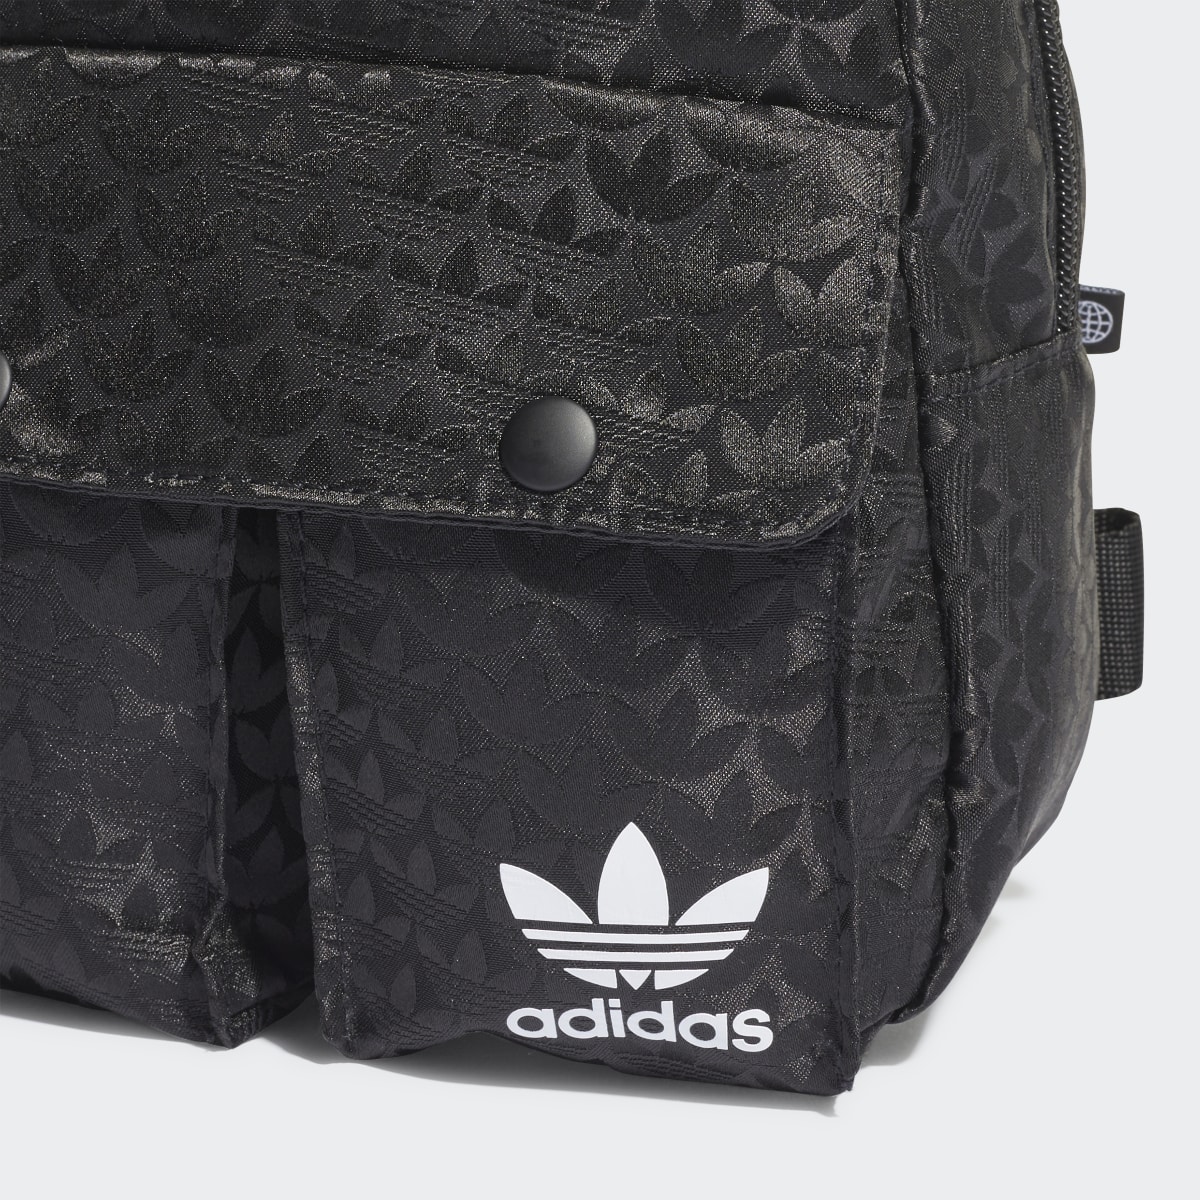 Adidas Mini Backpack. 6